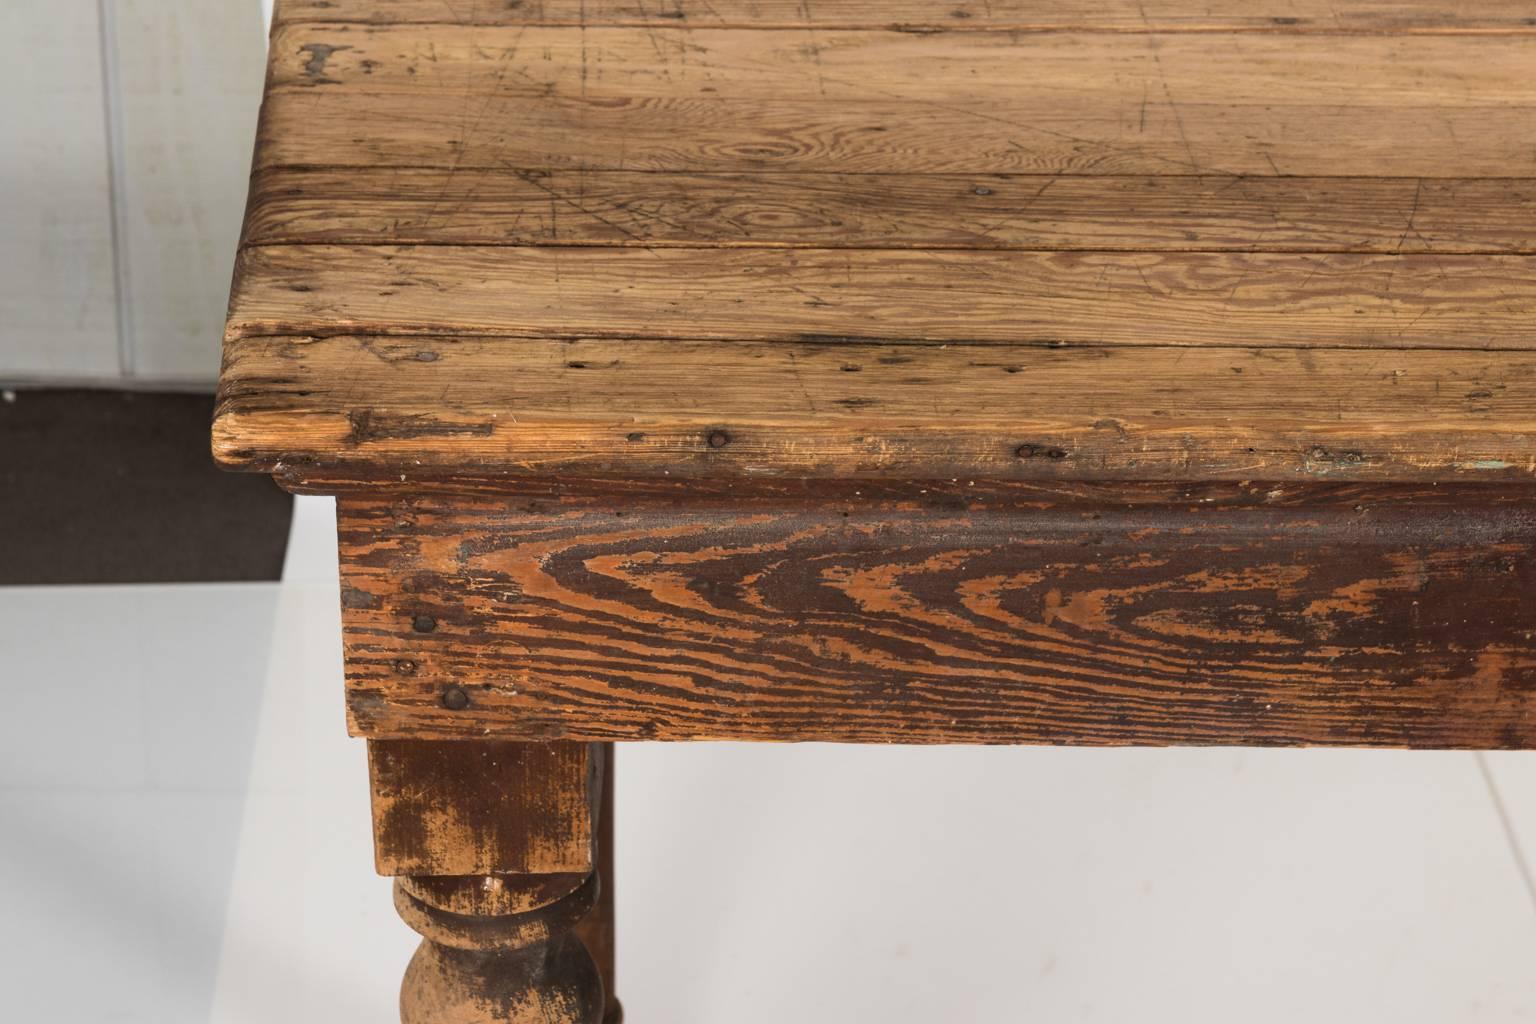 Late 19th English Century Rustic Pine Board Farm Table 13